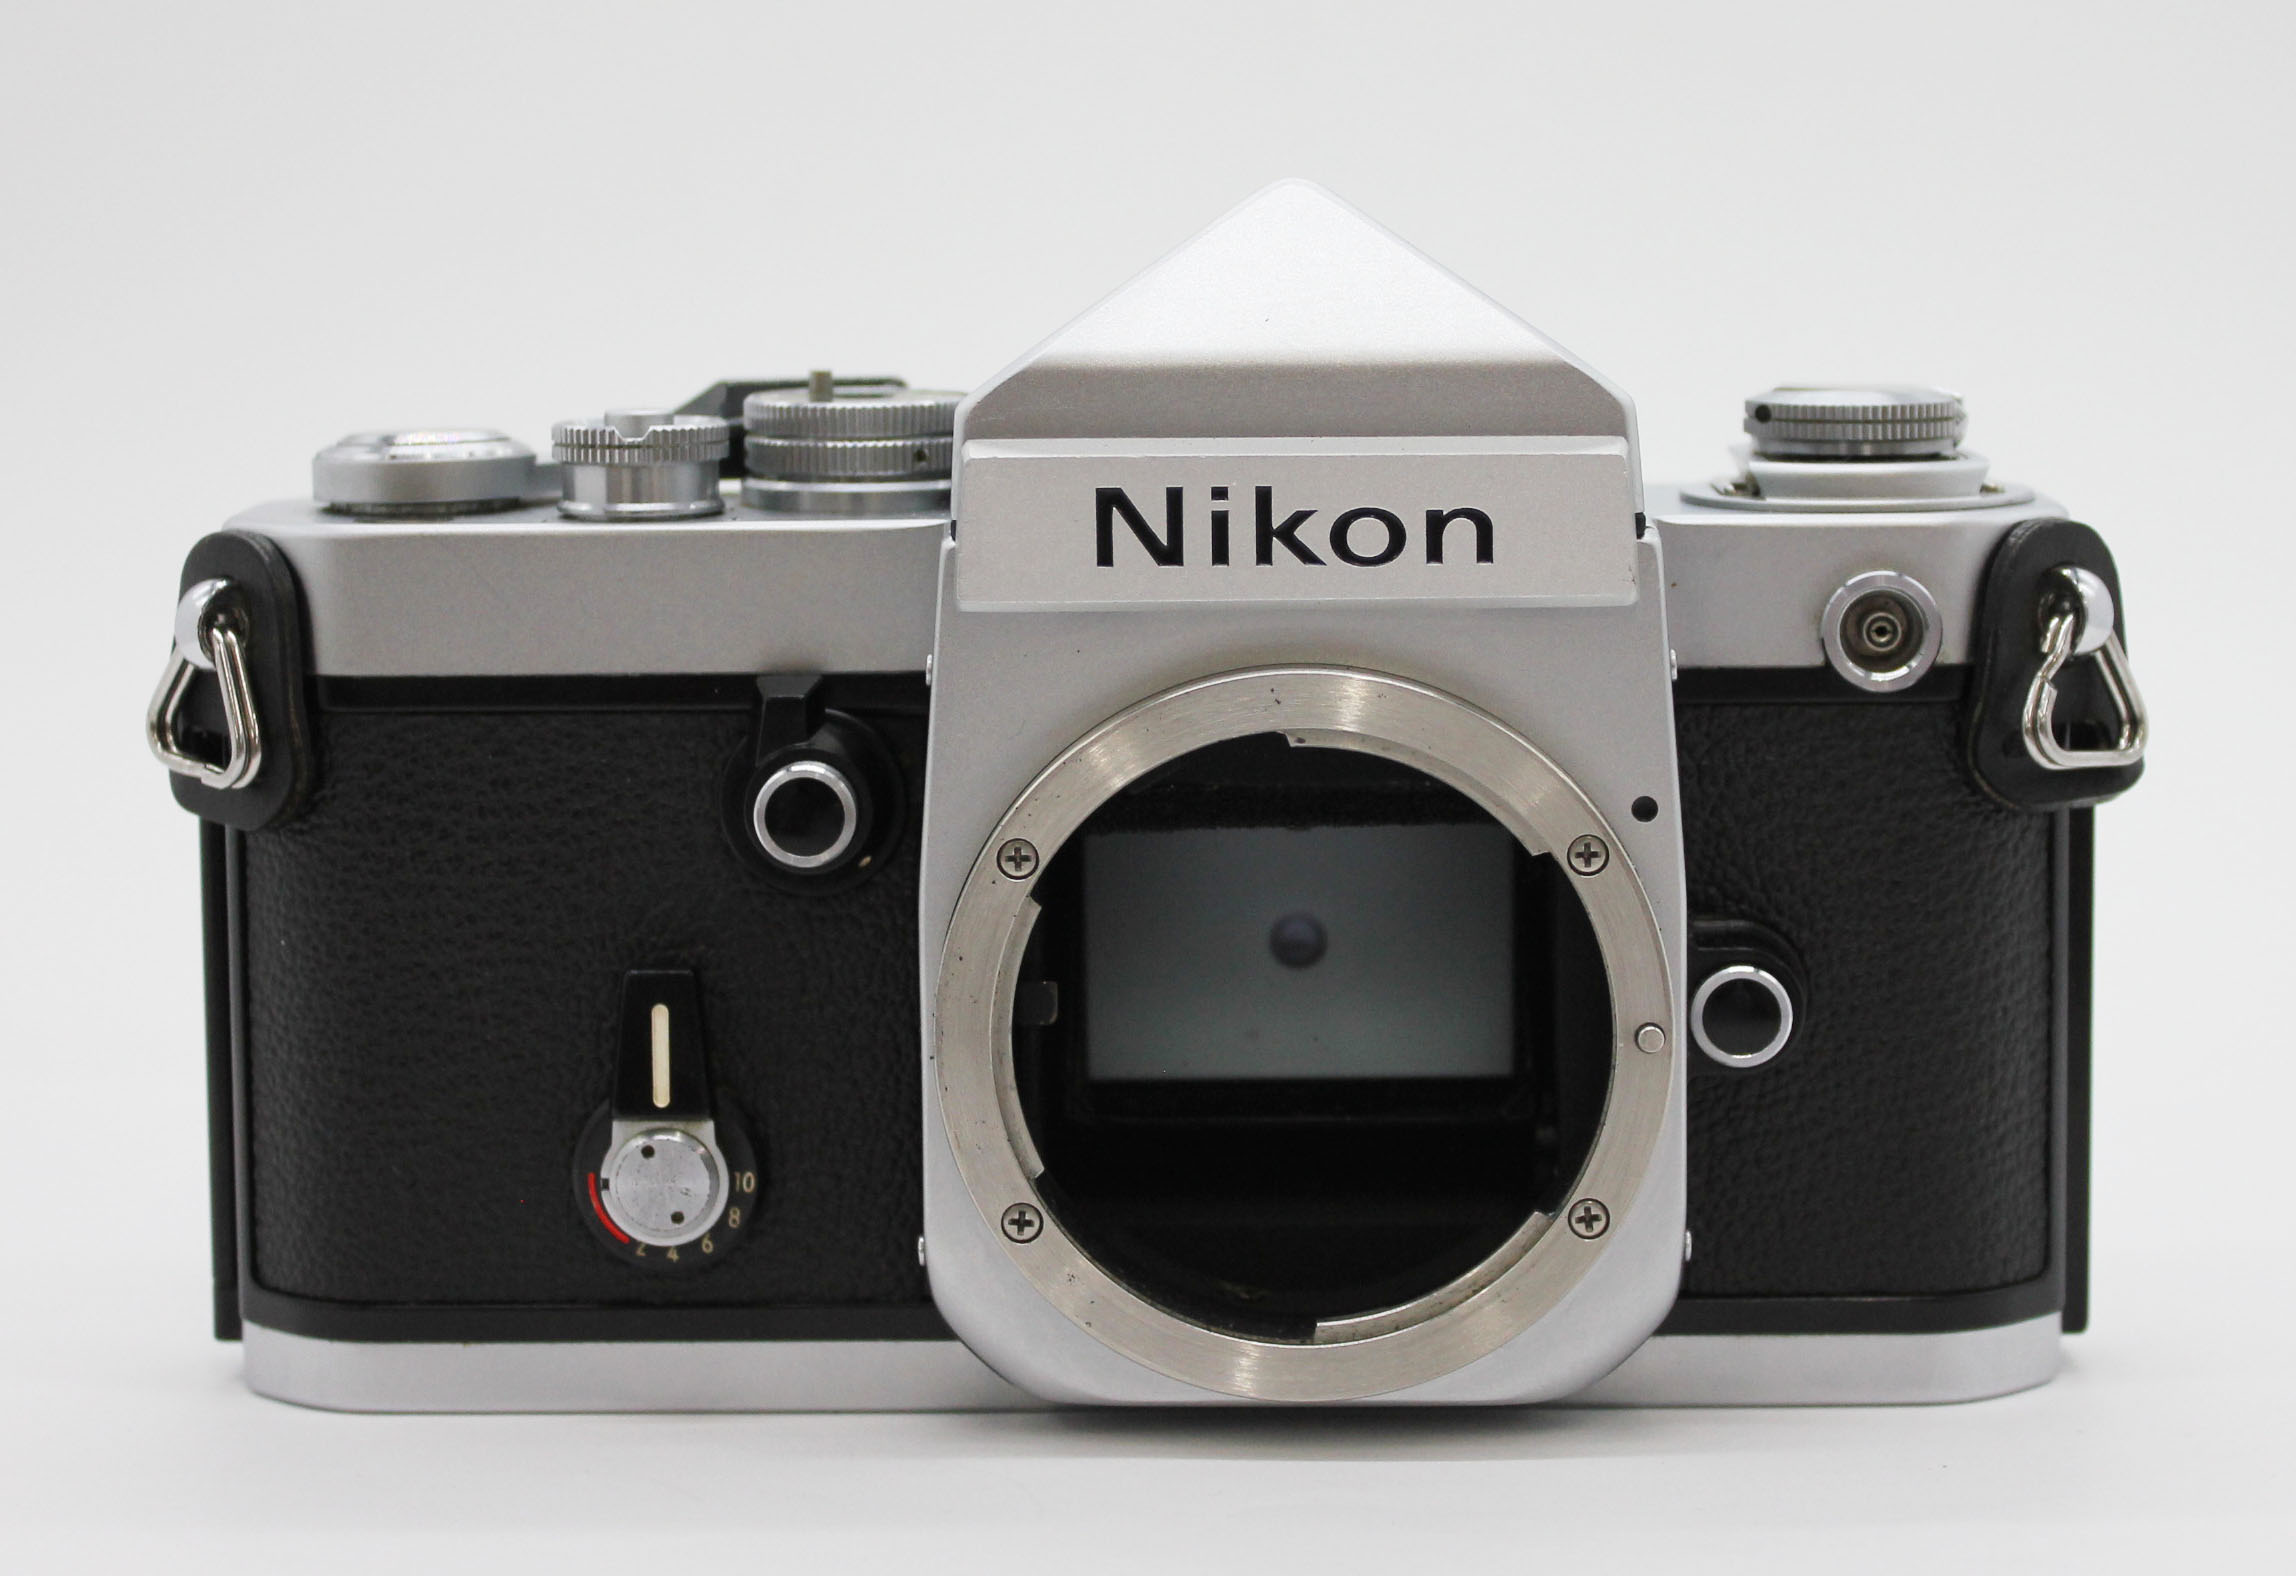  Nikon F2 Eye Level 35mm SLR Film Camera S/N 784* w/ DE-1 View Finder from Japan Photo 3